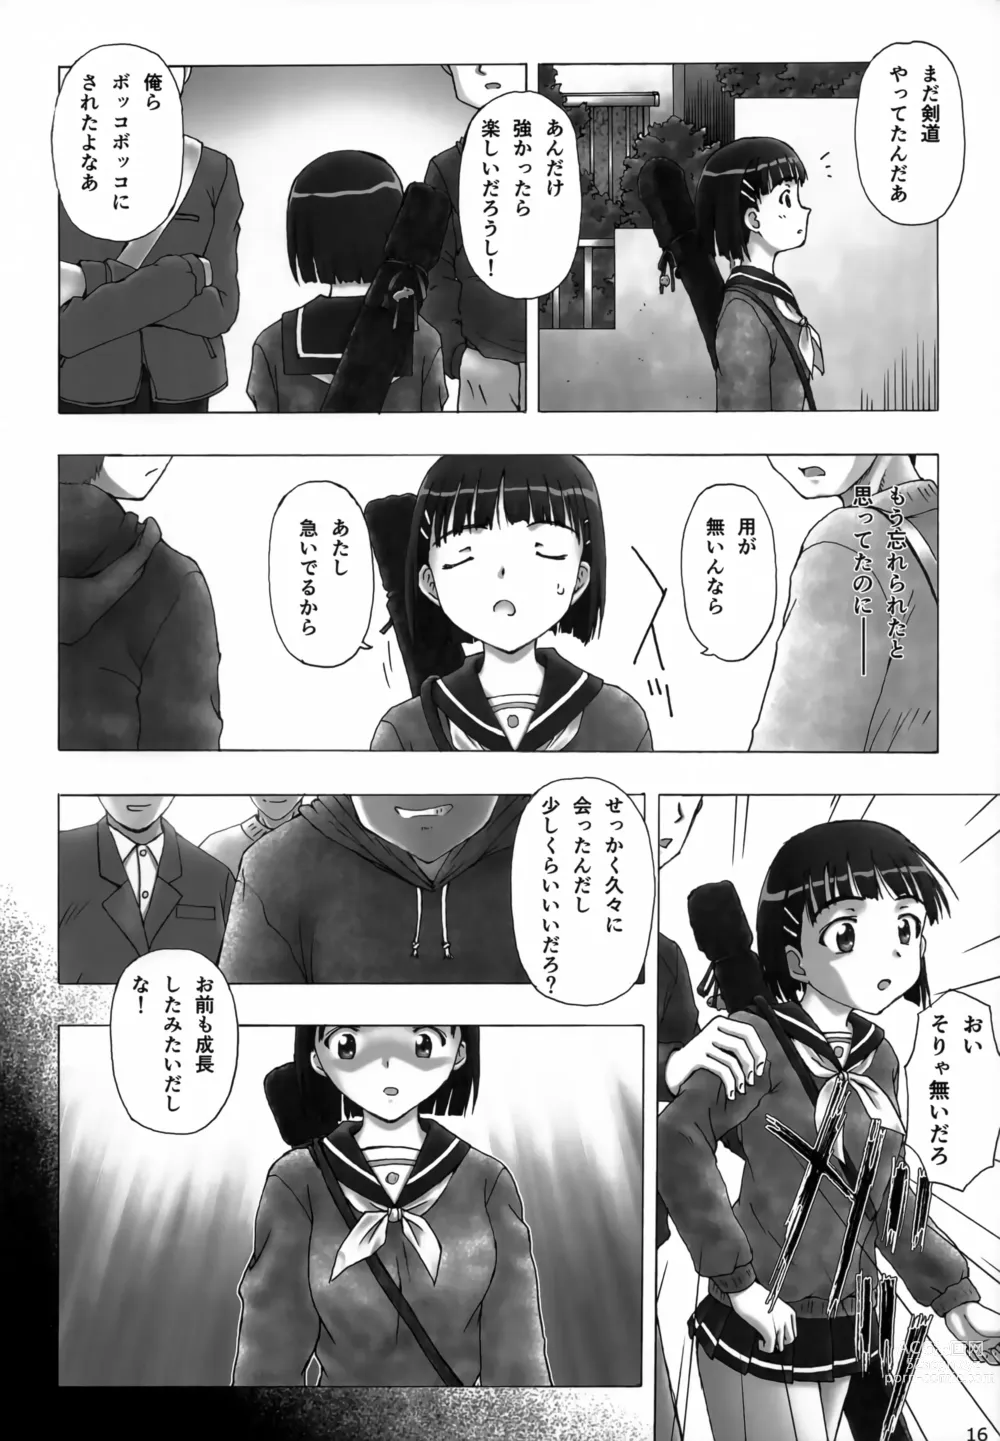 Page 15 of doujinshi Suguha Offline